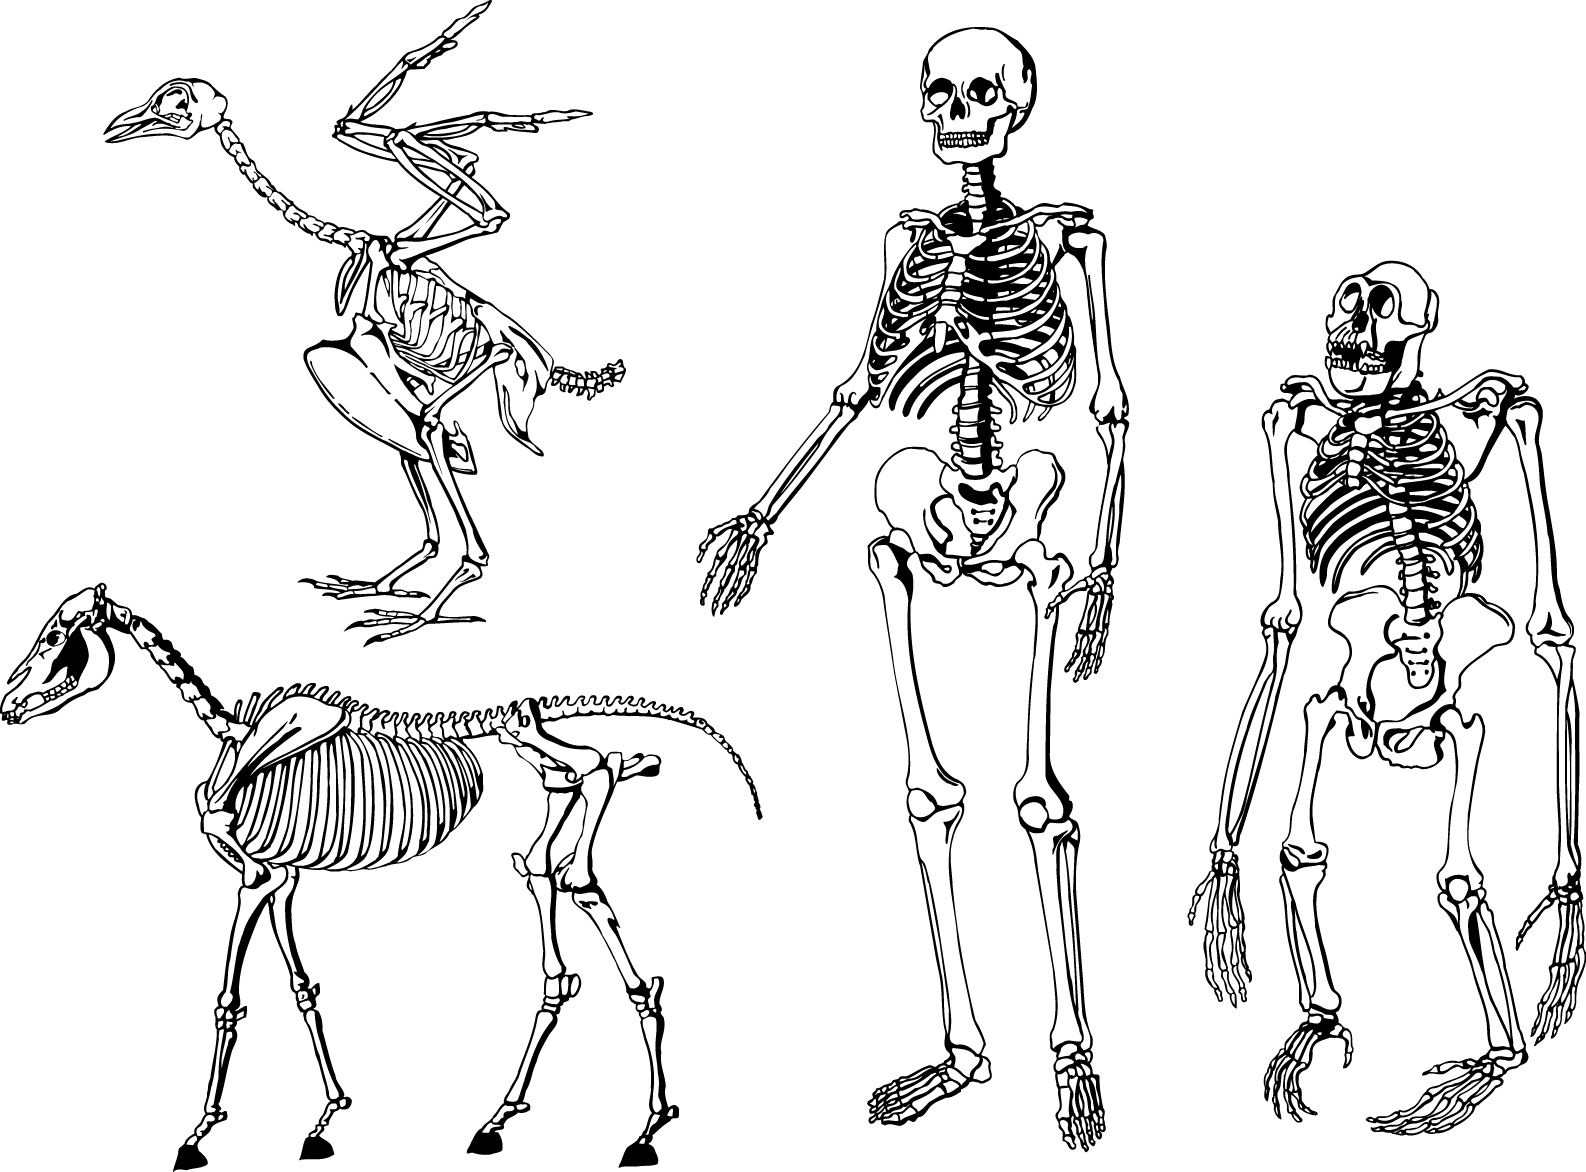 Animaland Human Skeletons Comparison PNG image